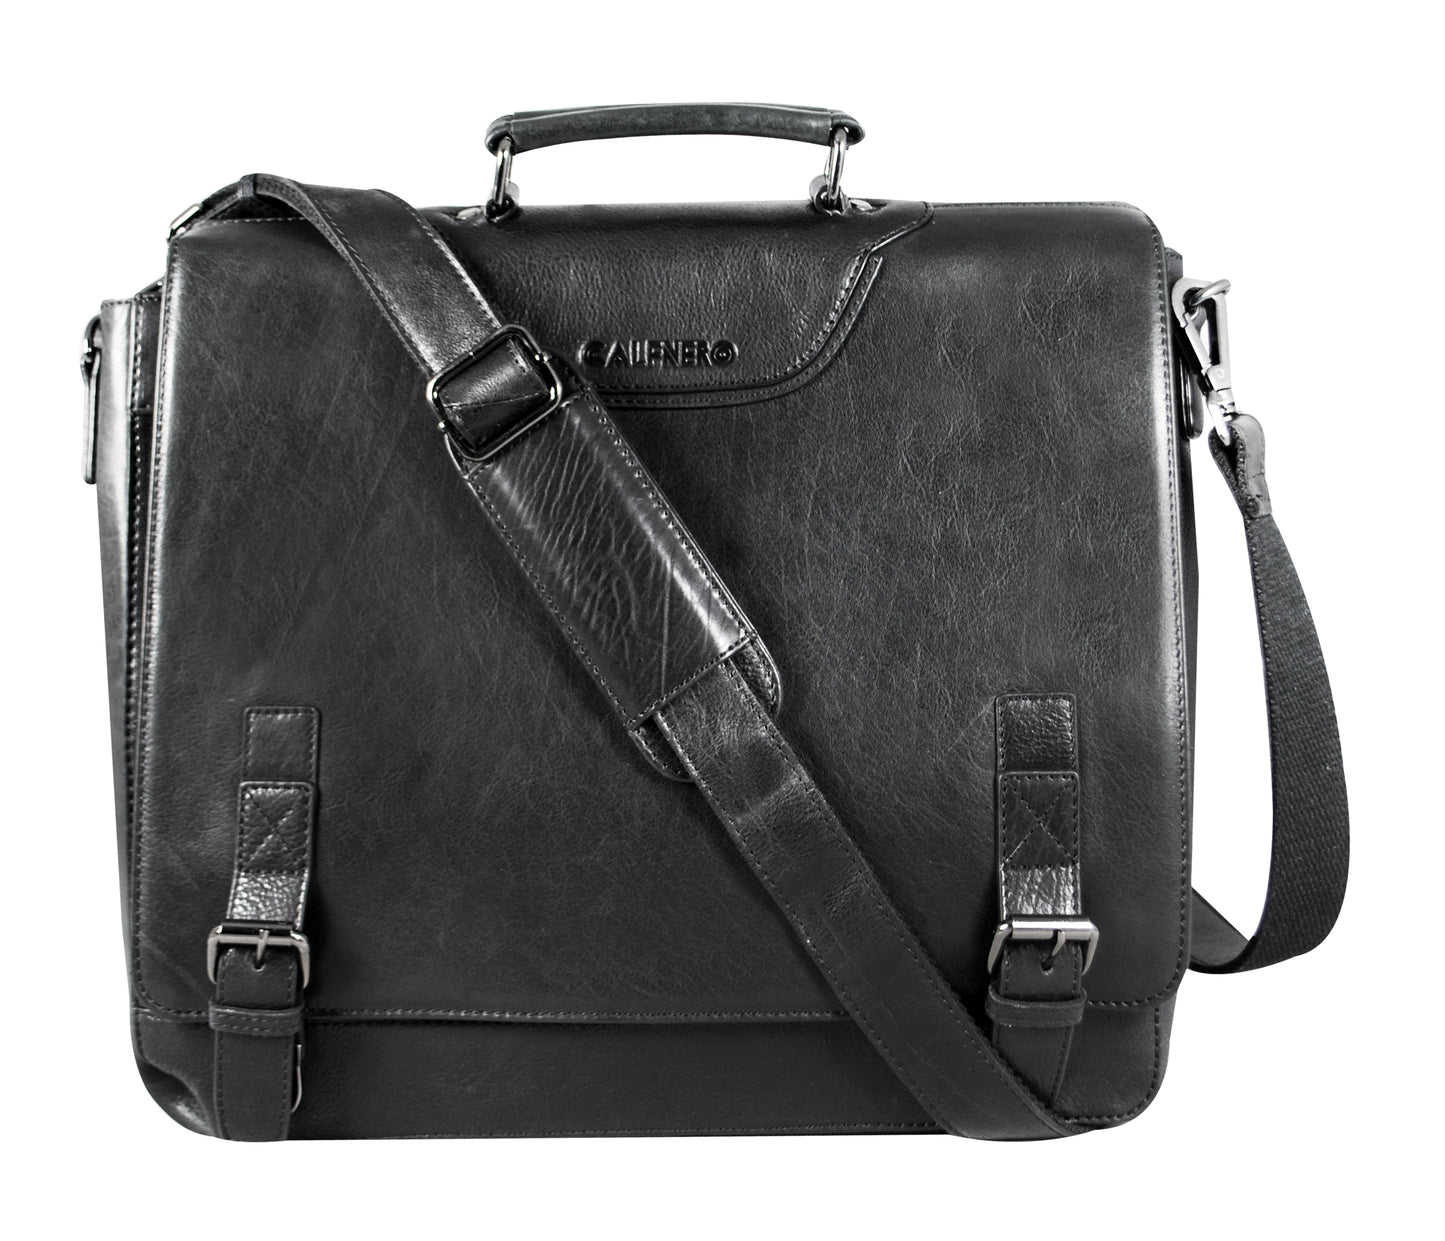 Calfnero Genuine Leather Men's Messenger Bag (402614-Black)